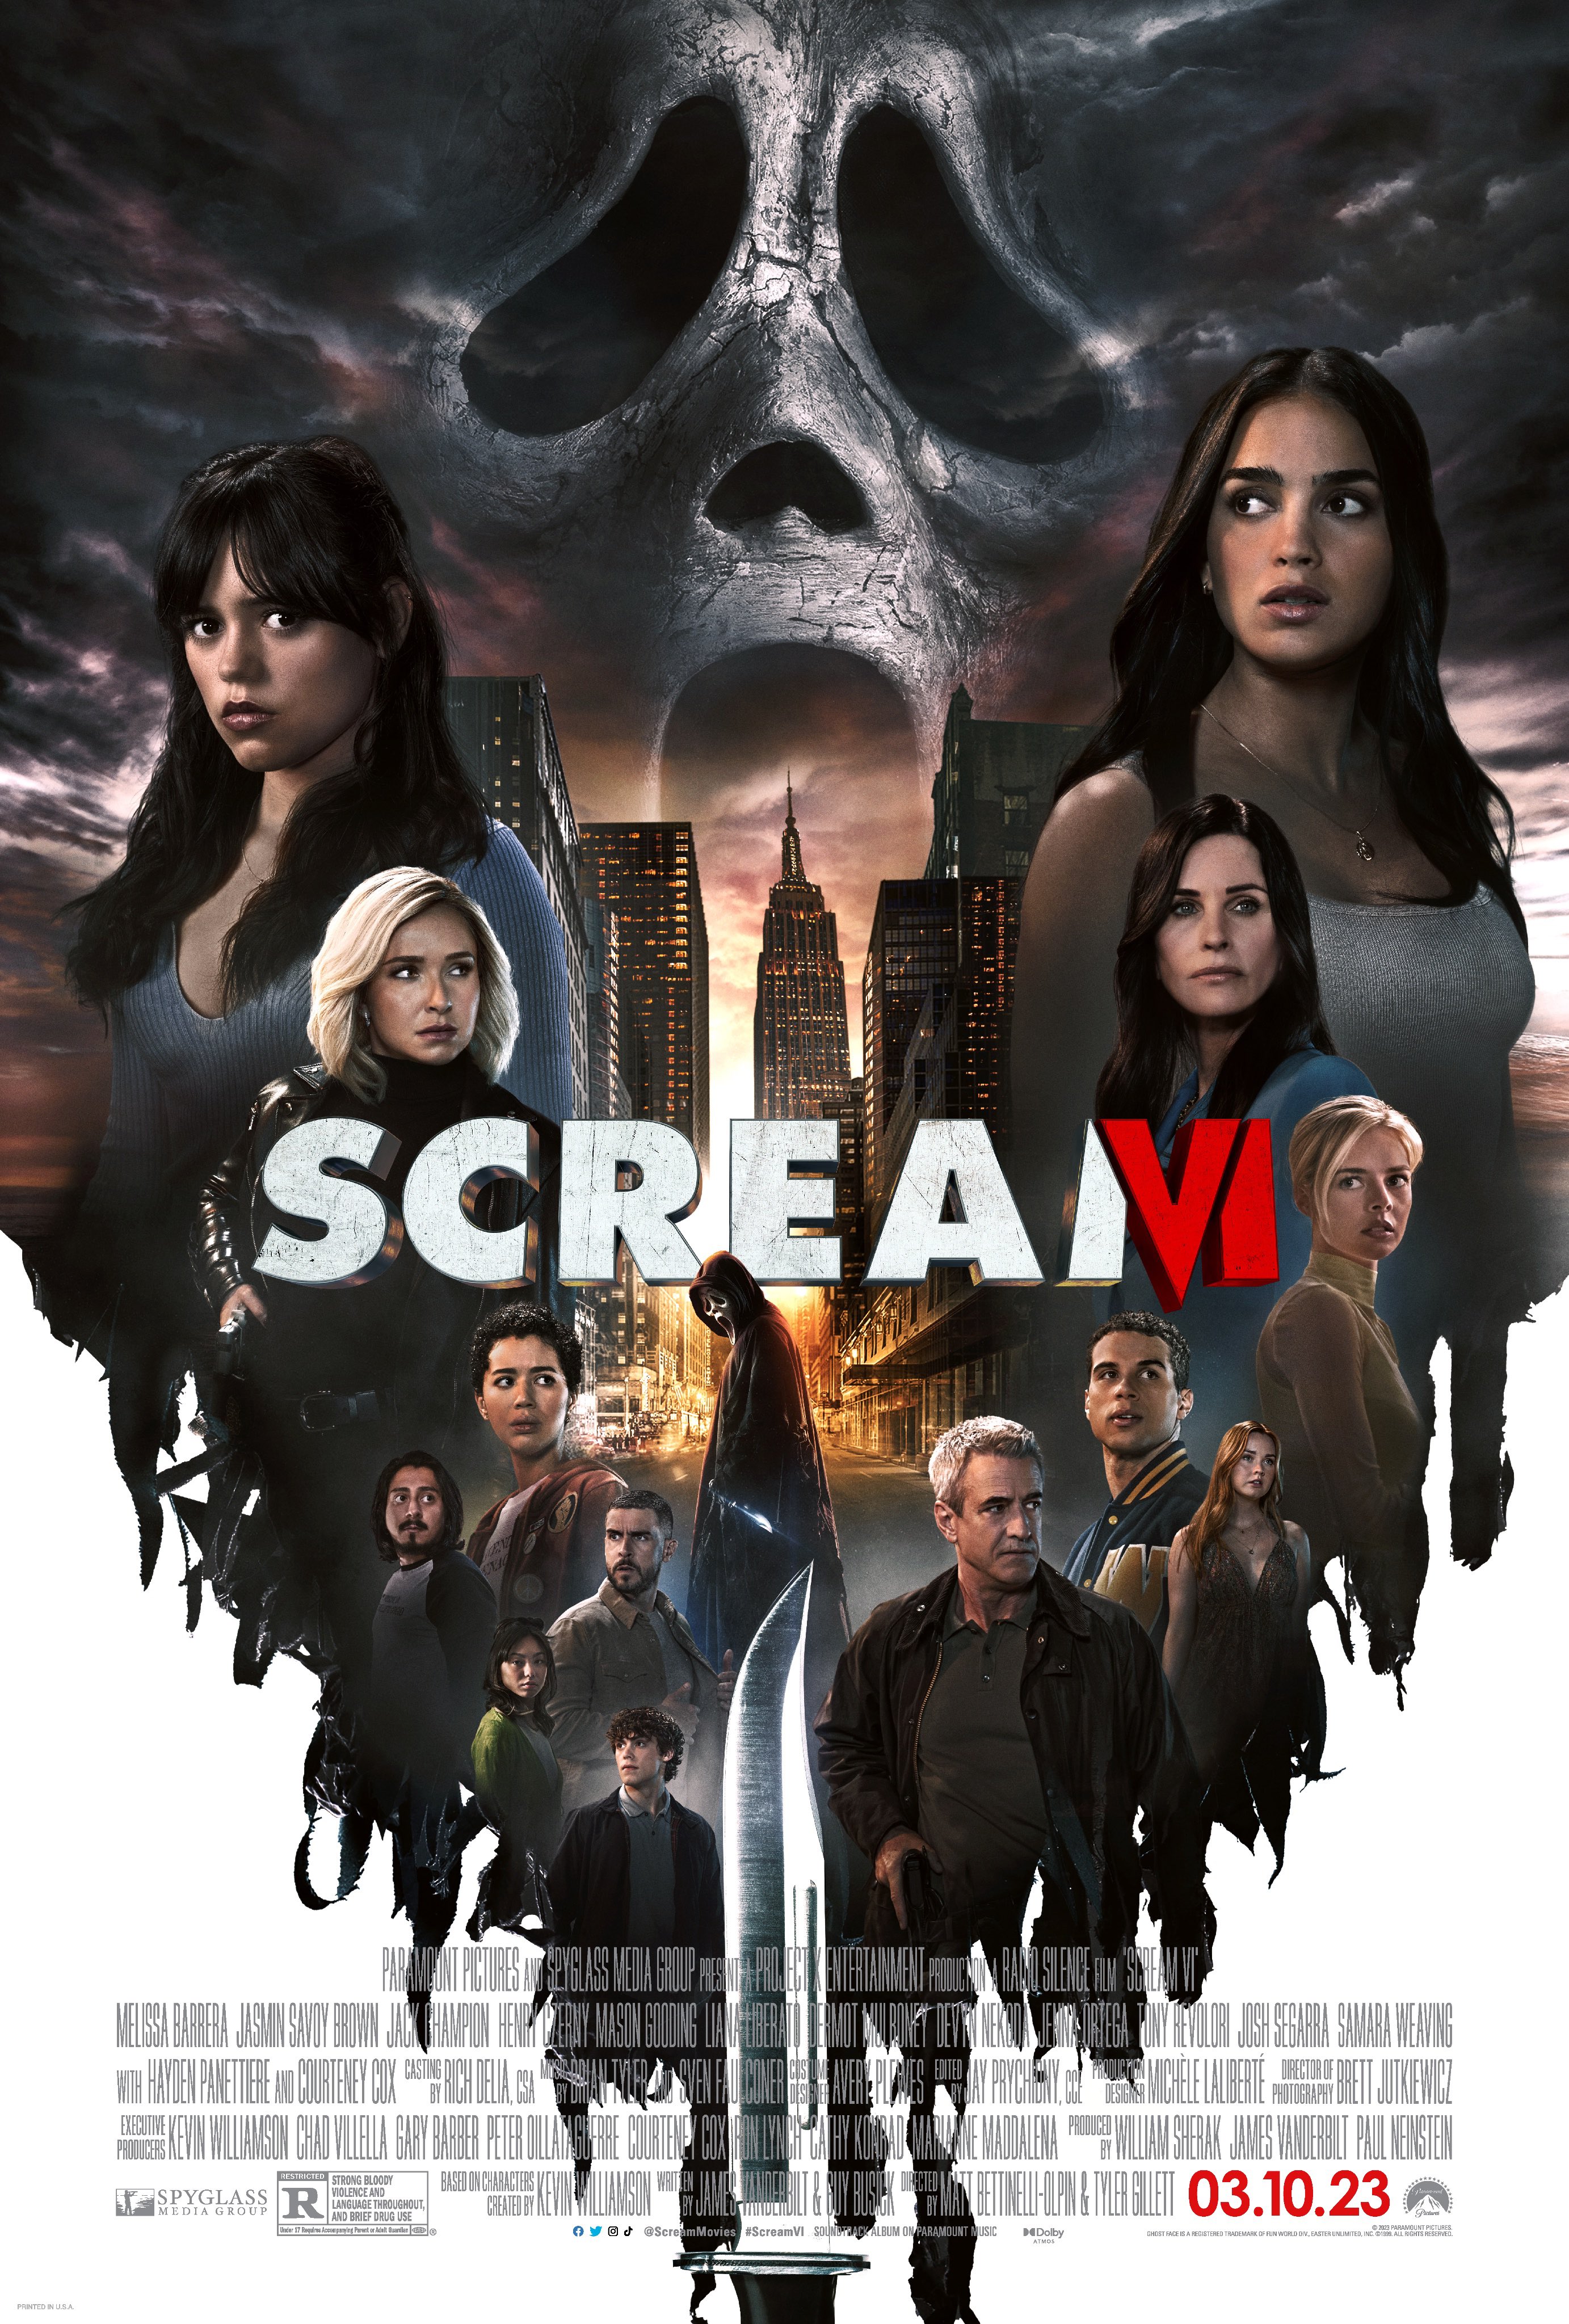 andrew popham recommends scream full movie free pic